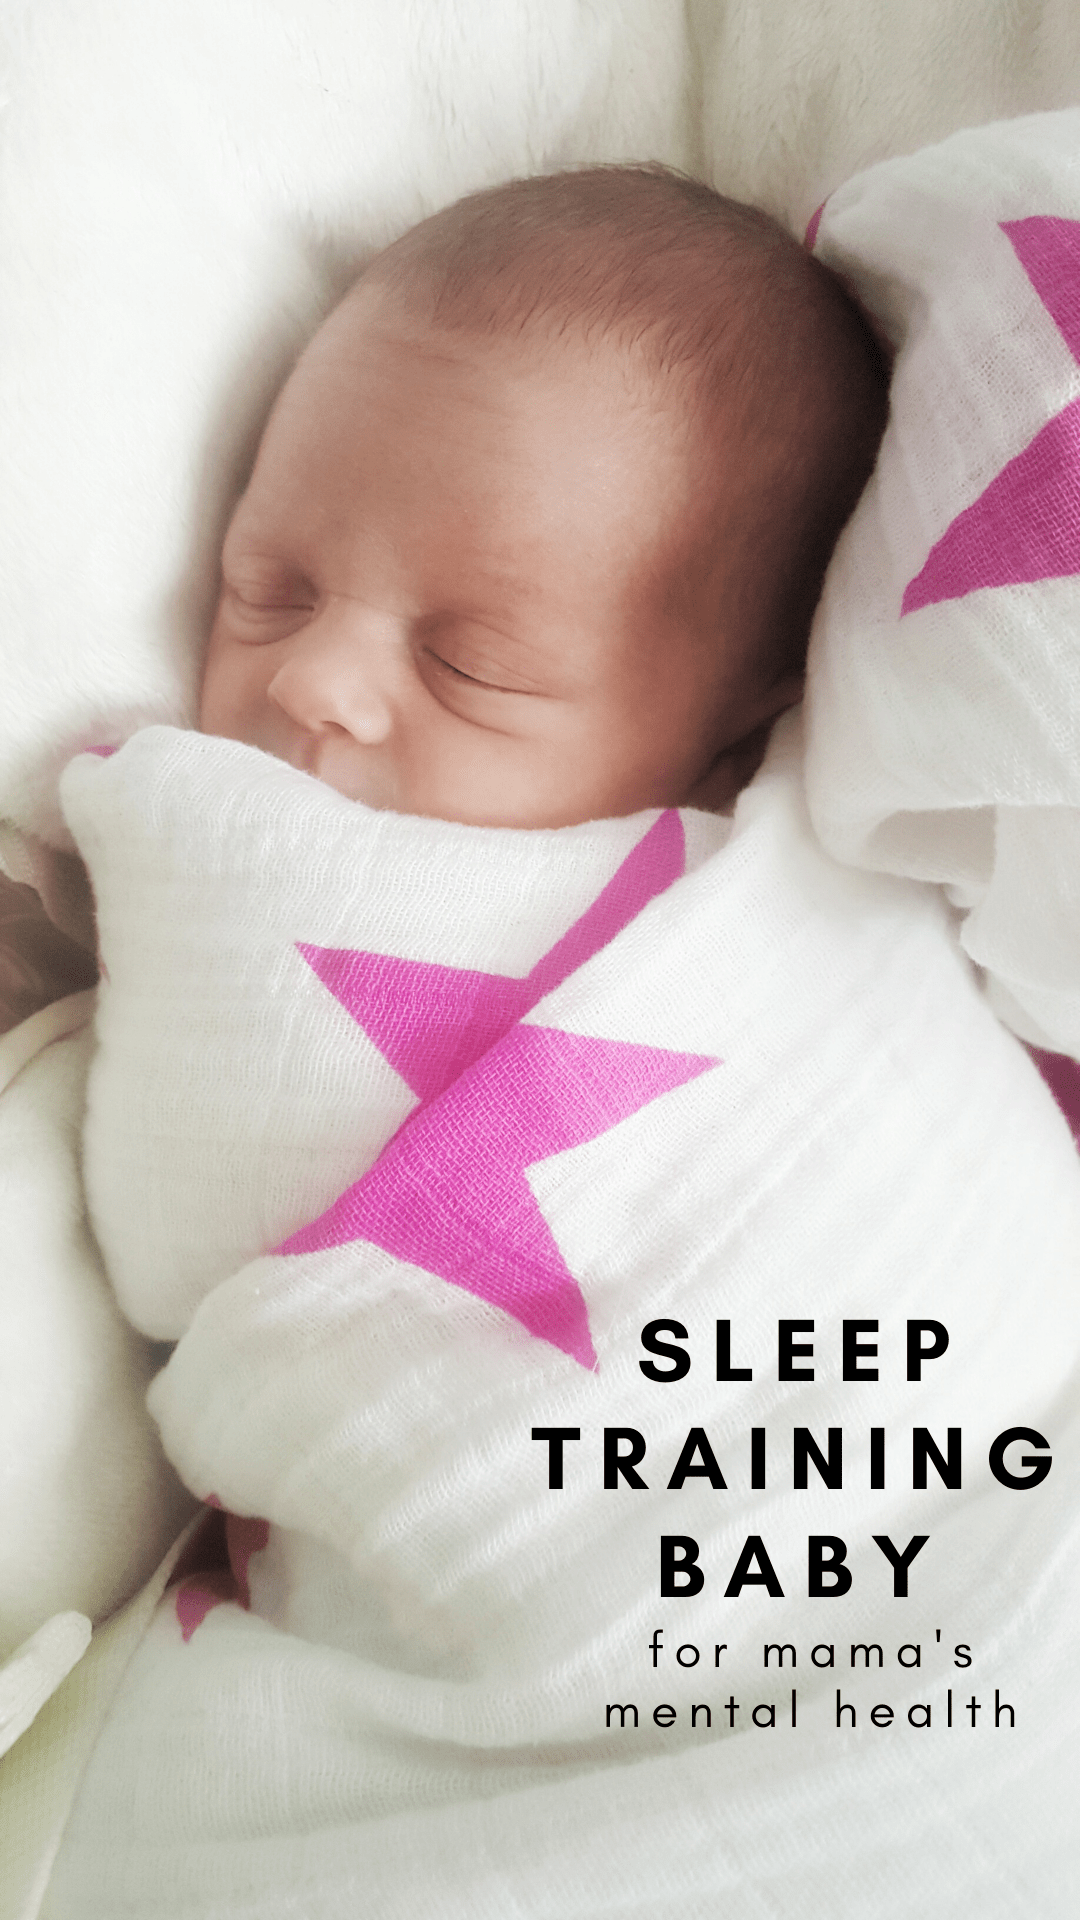 How to sleep train a baby